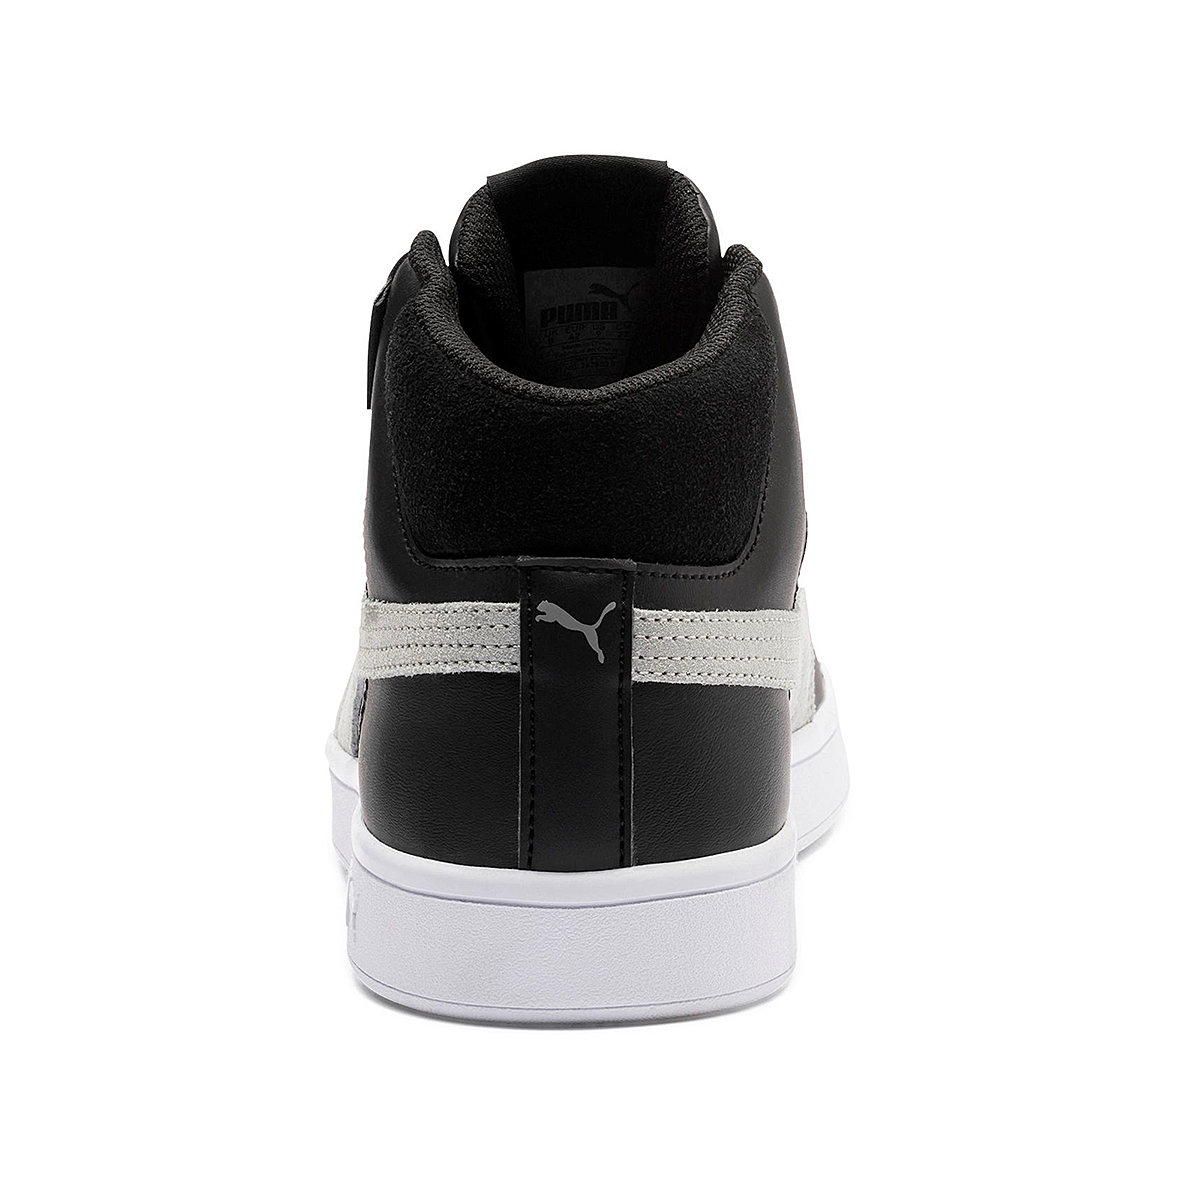 Puma Smash v2 Mid PureTEX Unisex Sneaker Schuh schwarz 367853 01